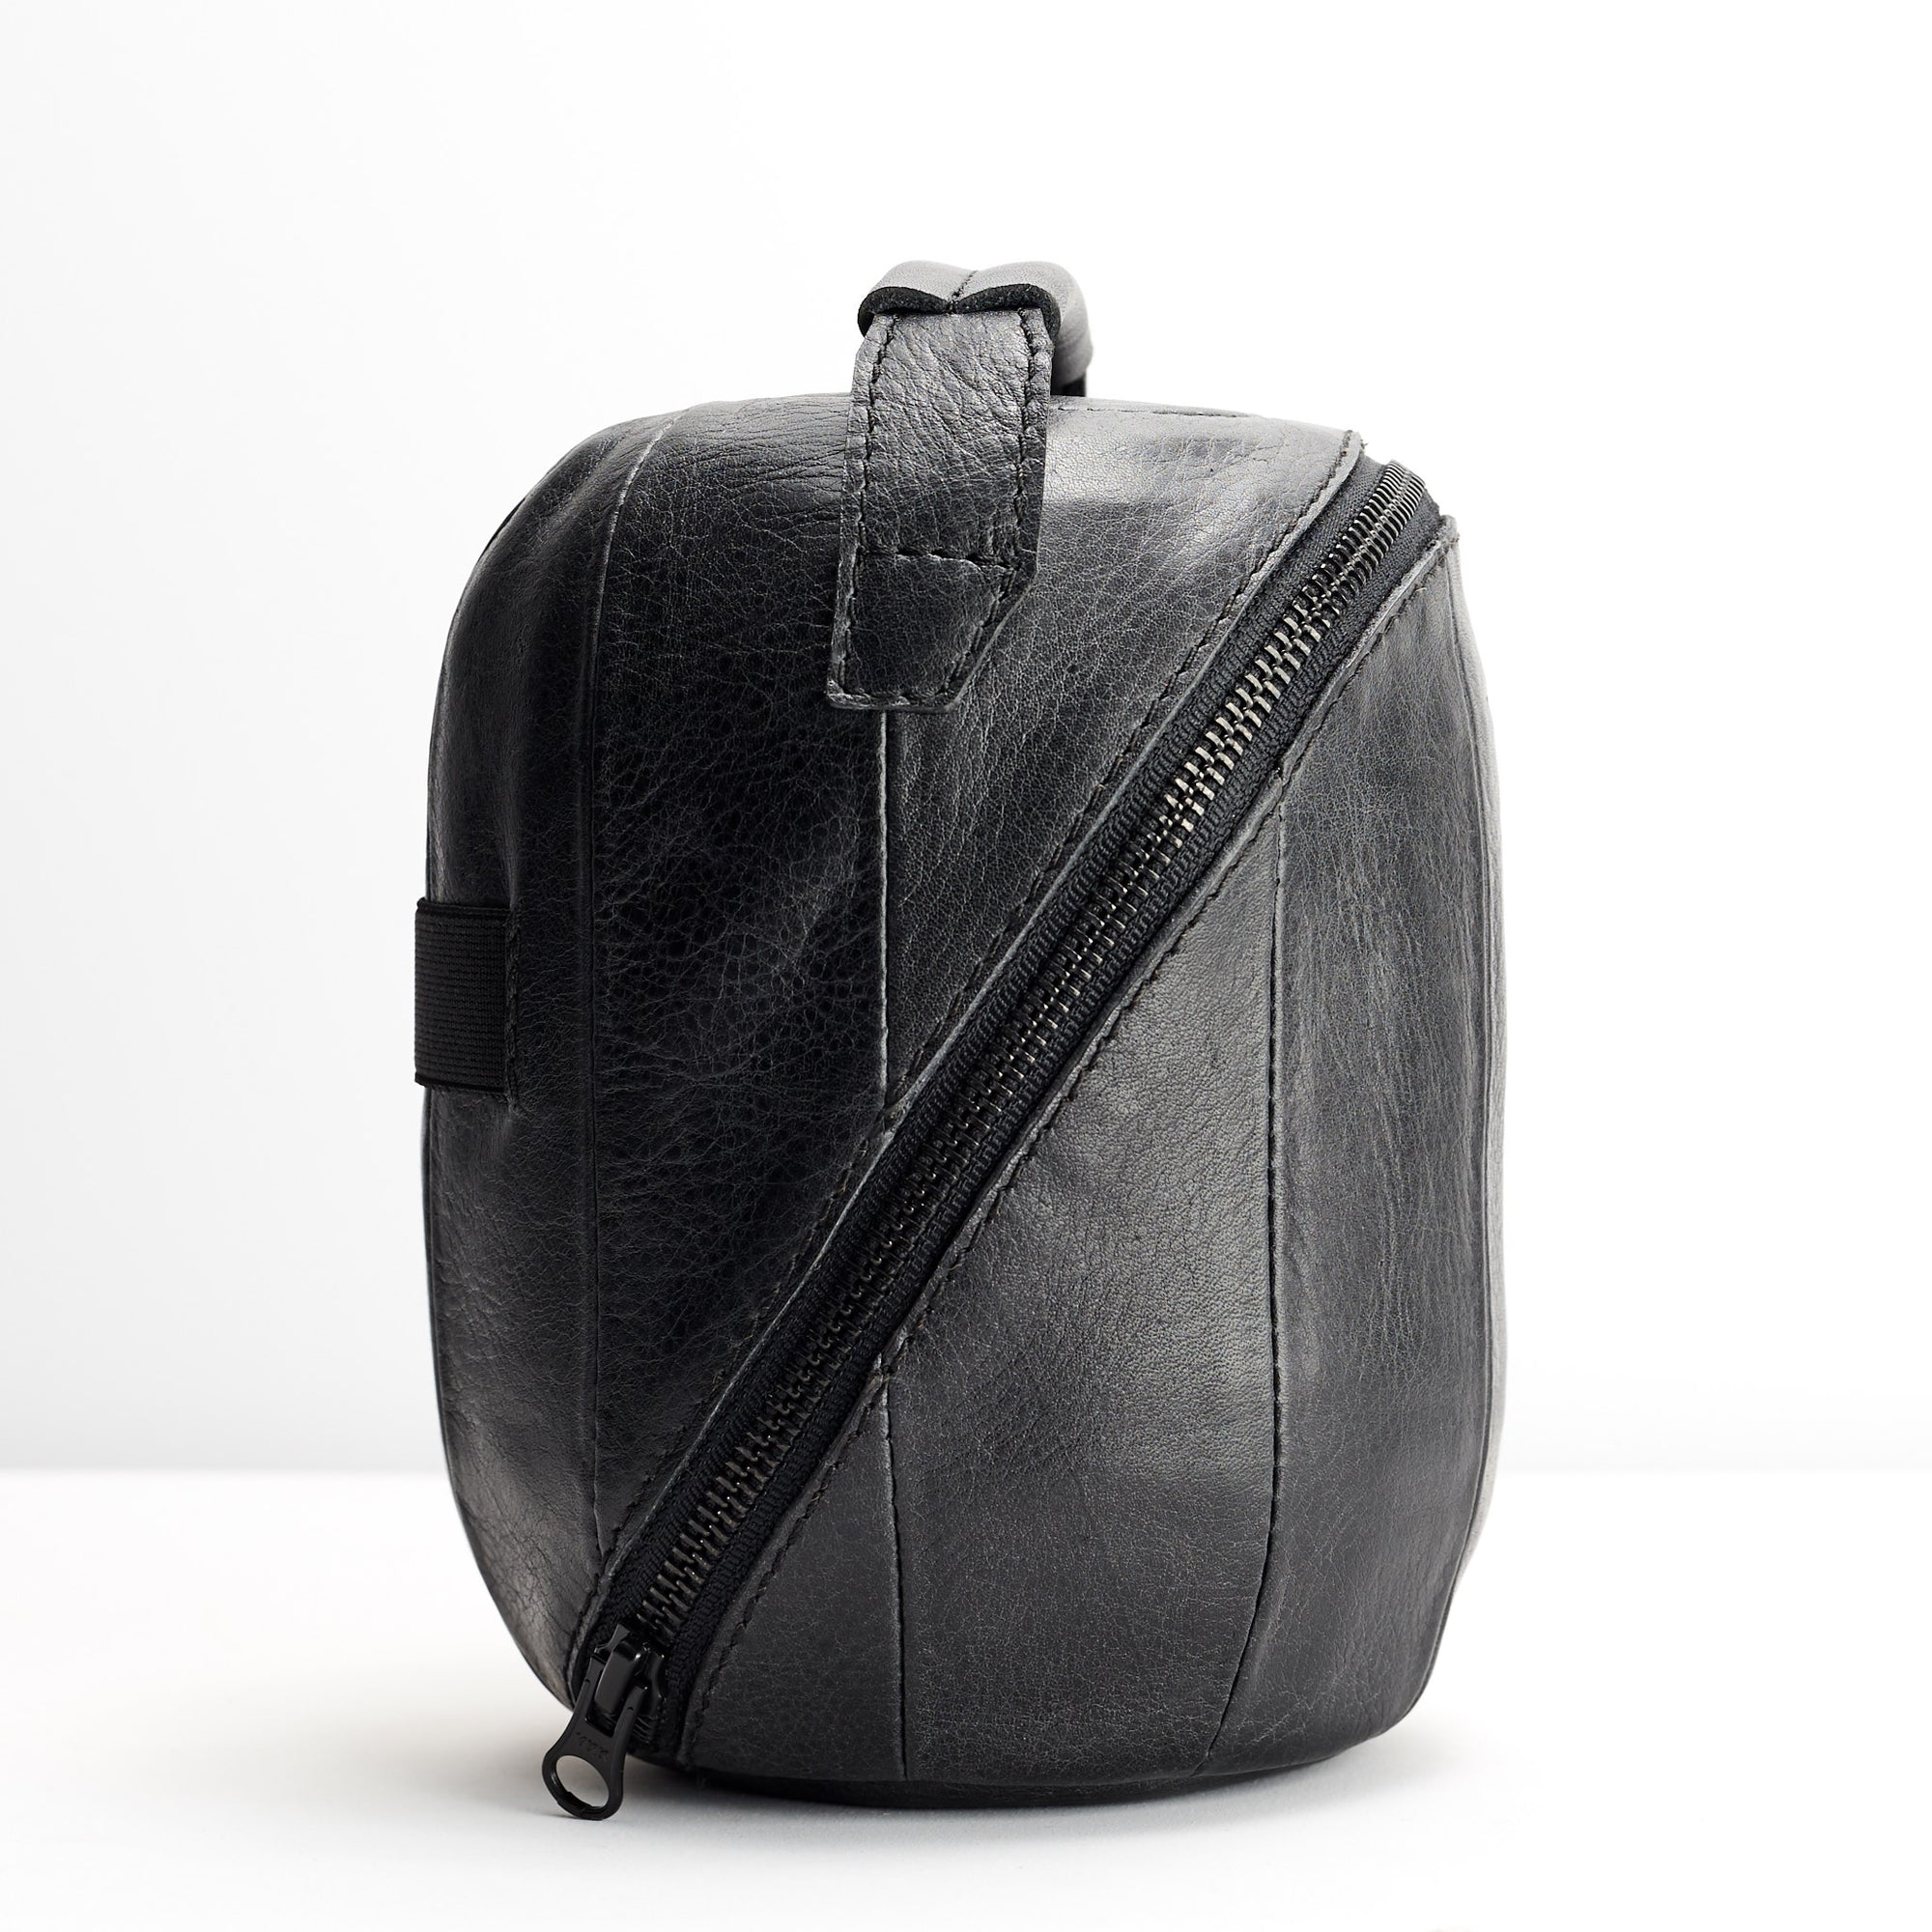 YKK metallic zippers. HomePod black leather travel carrying case.